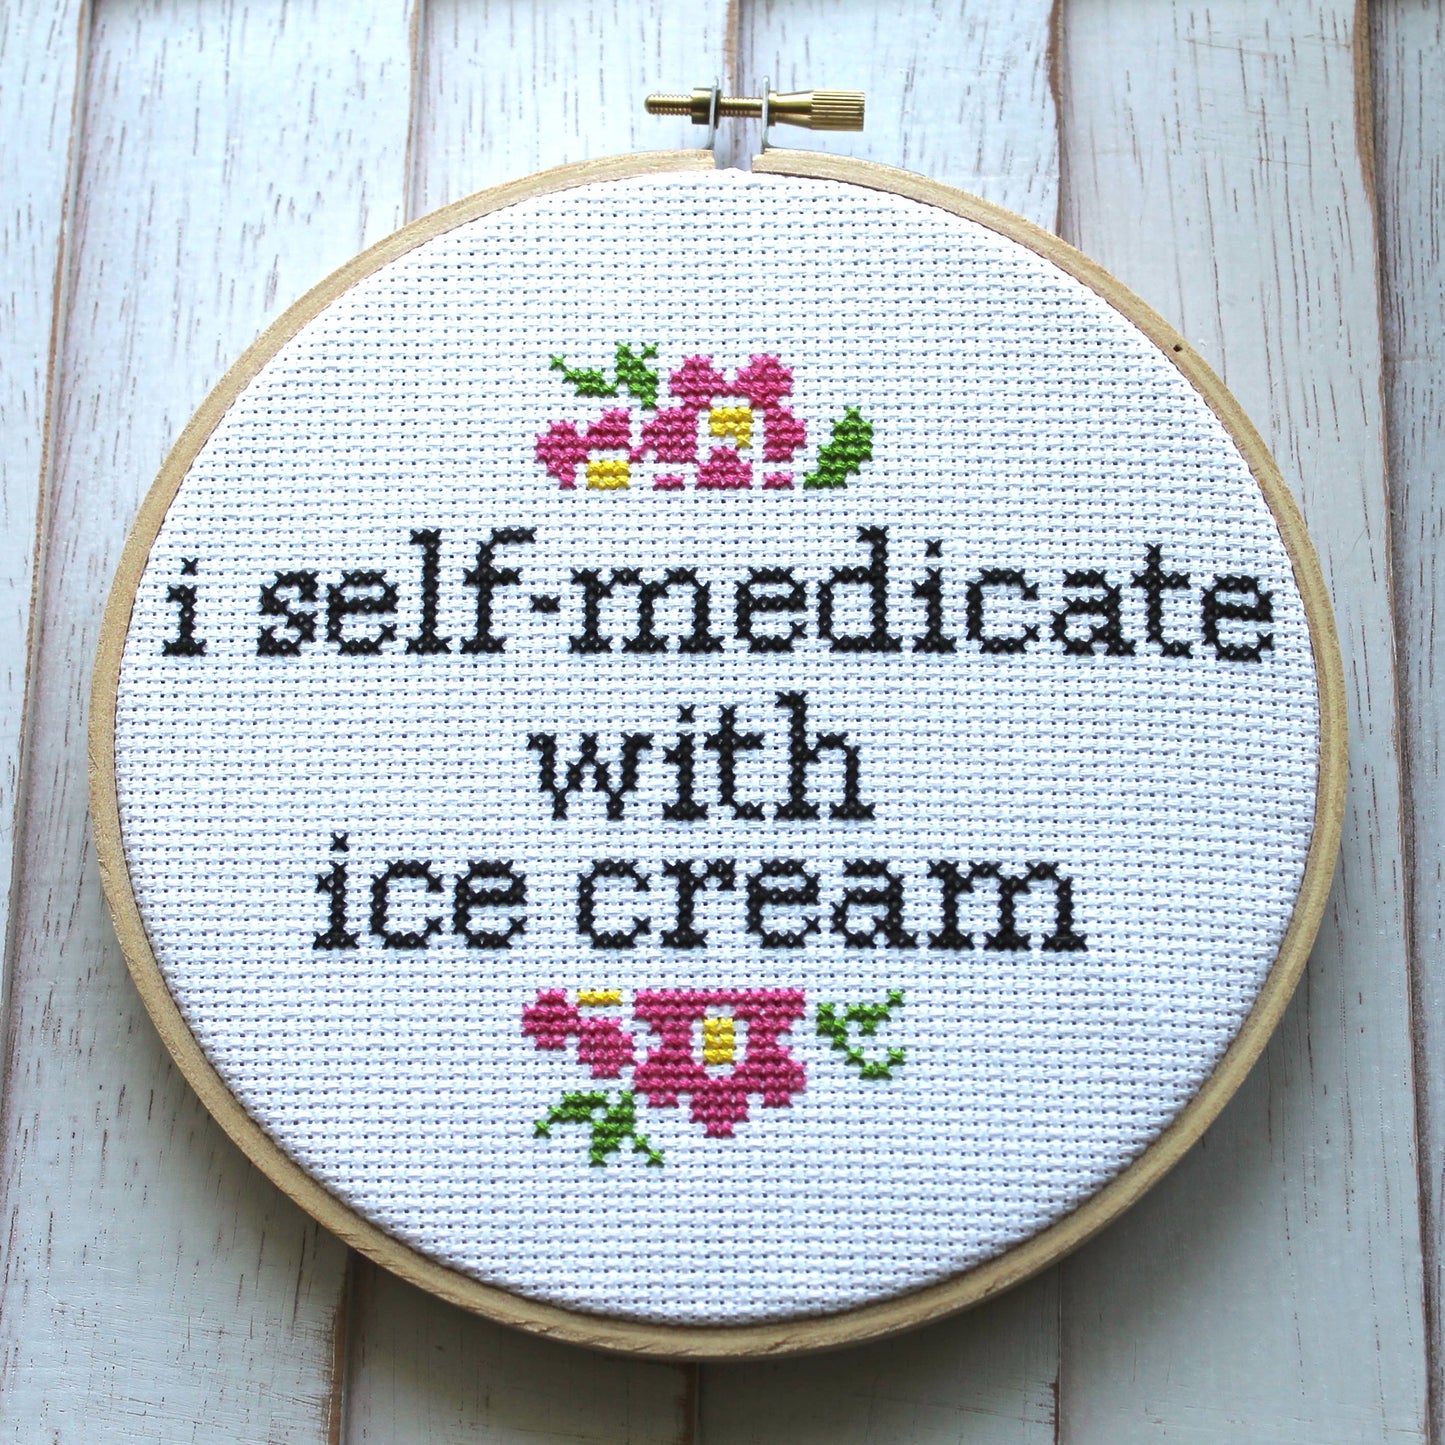 Self-Medicate Cross Stitch Kit